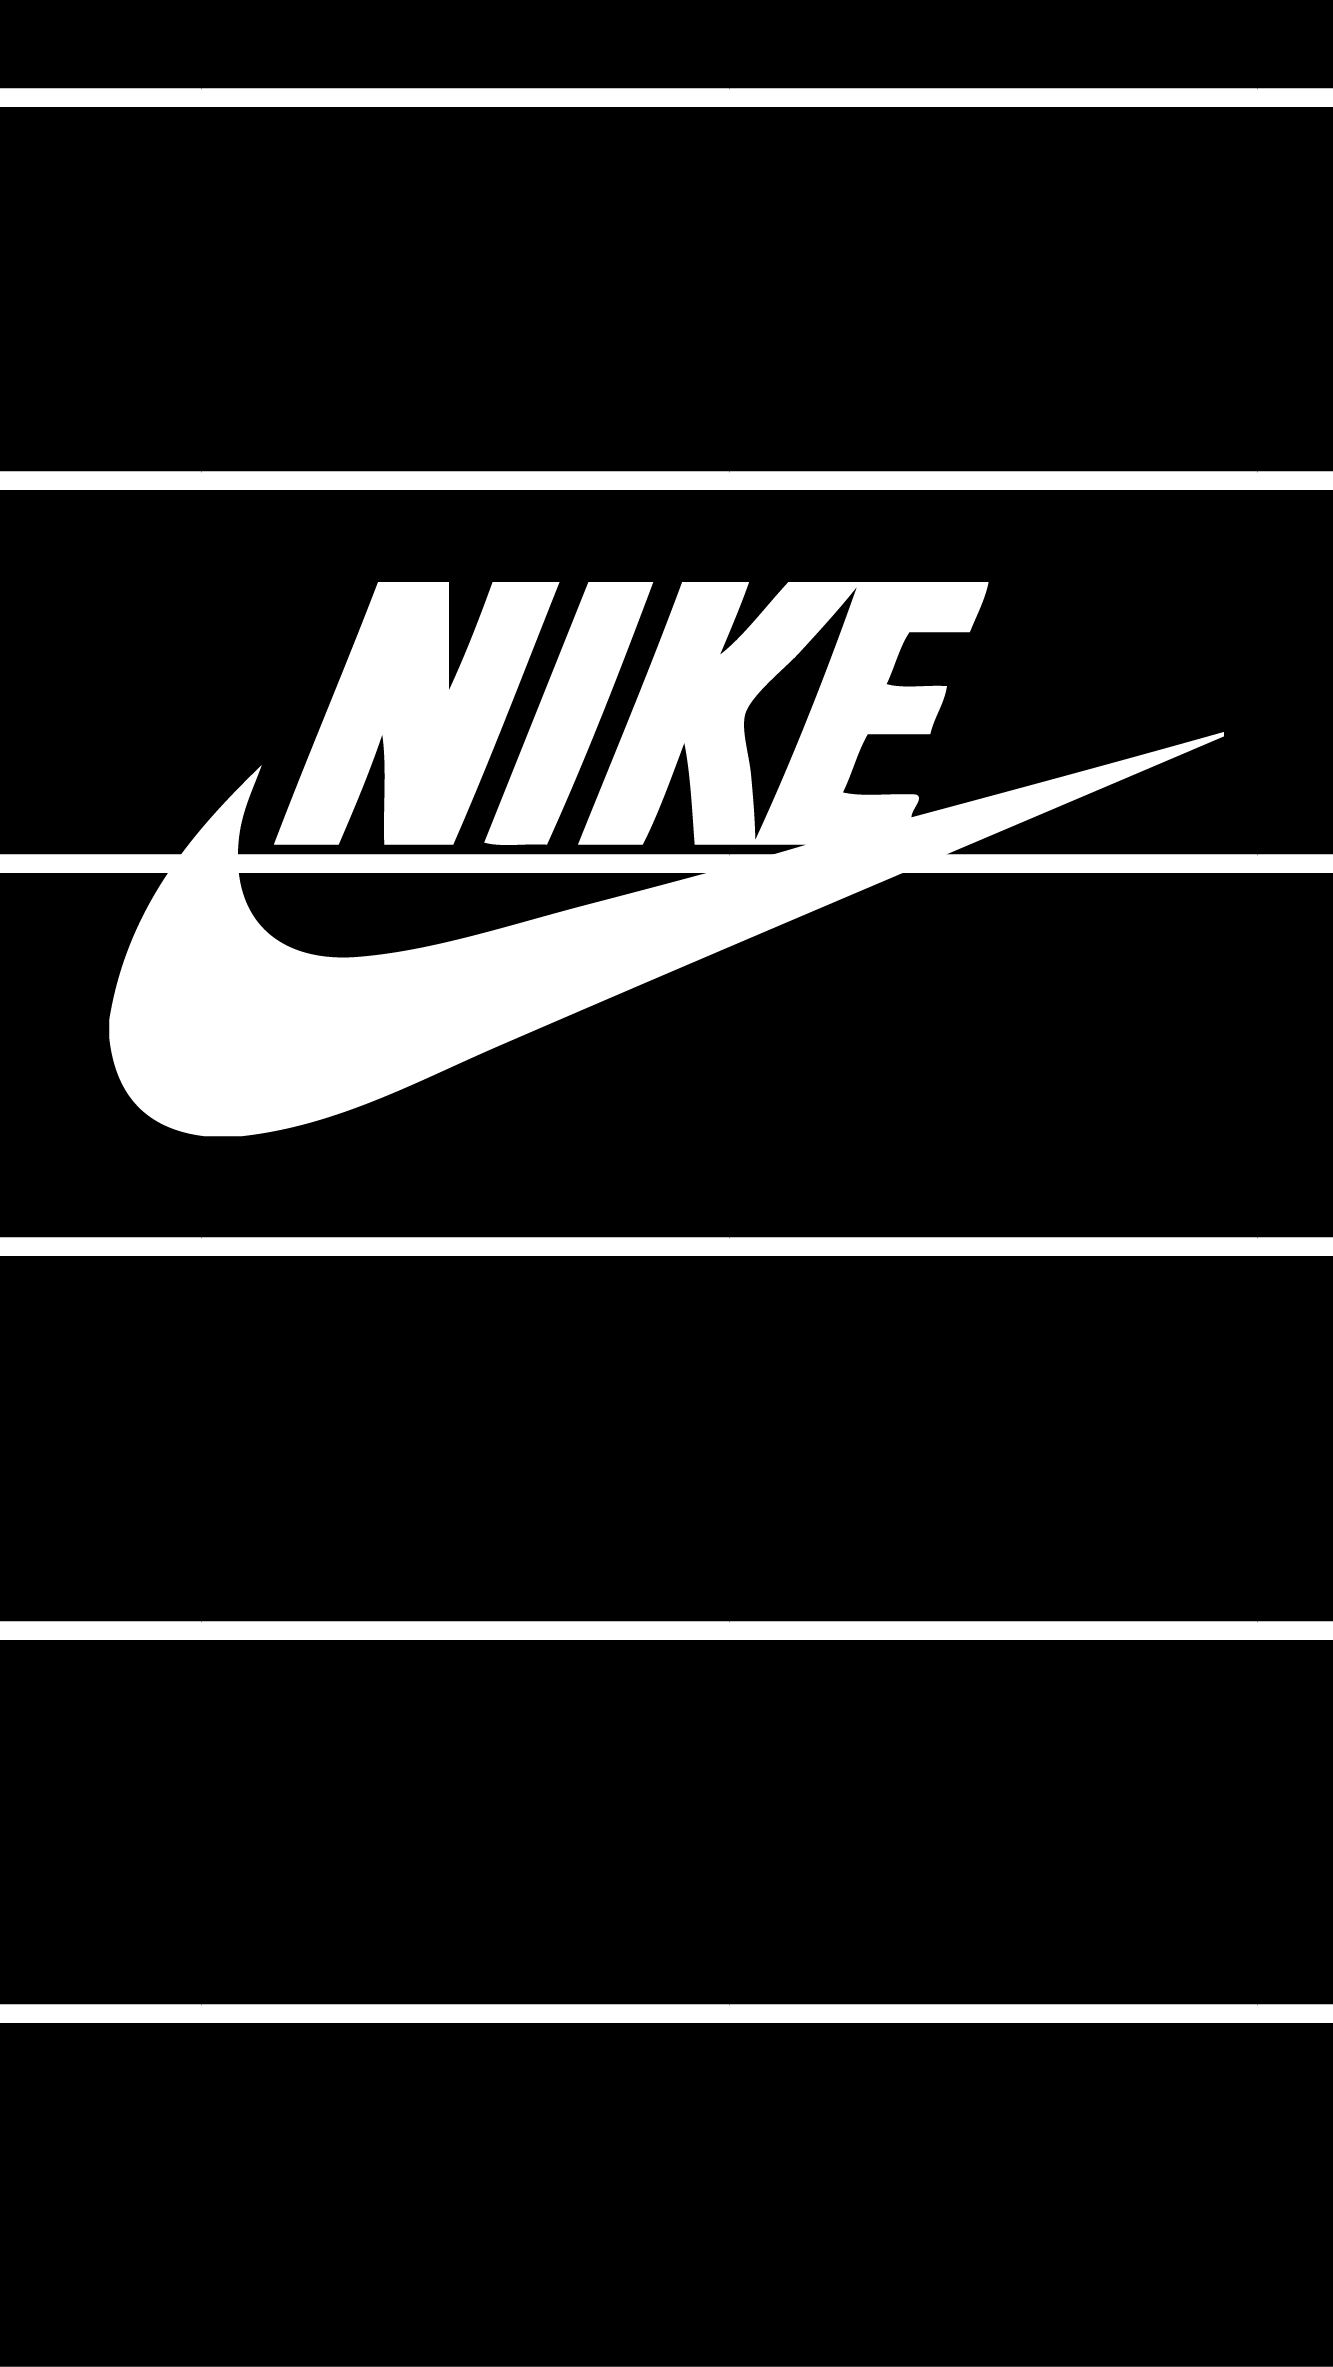 Nike Wallpaper 2. Nike wallpaper, Nike quotes, Nike logo wallpaper